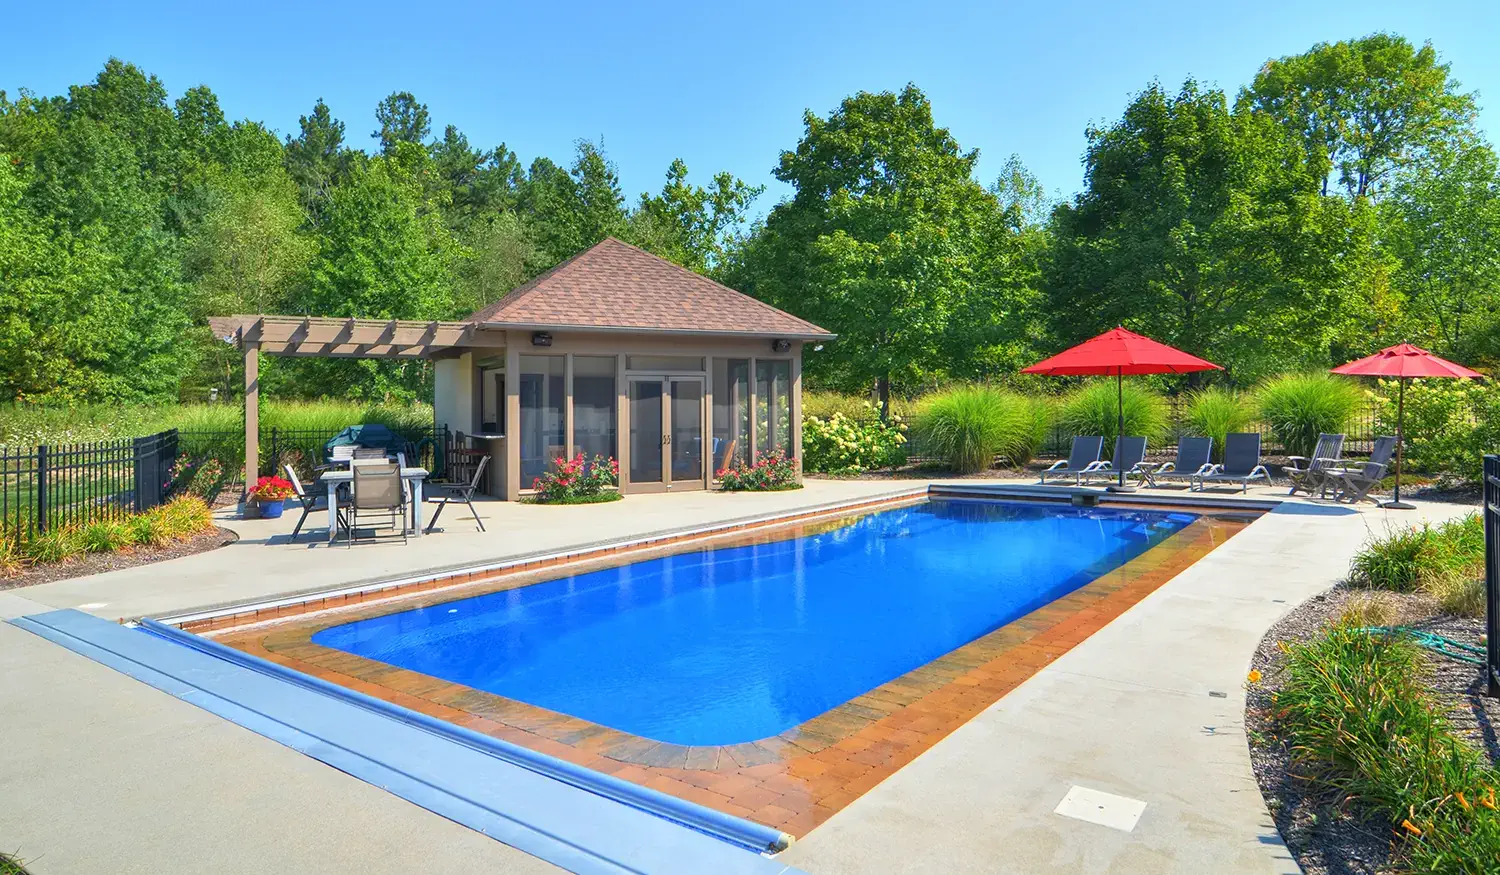 5 Reasons Why a Fiberglass Backyard Pool is Better than a Beach Vacation